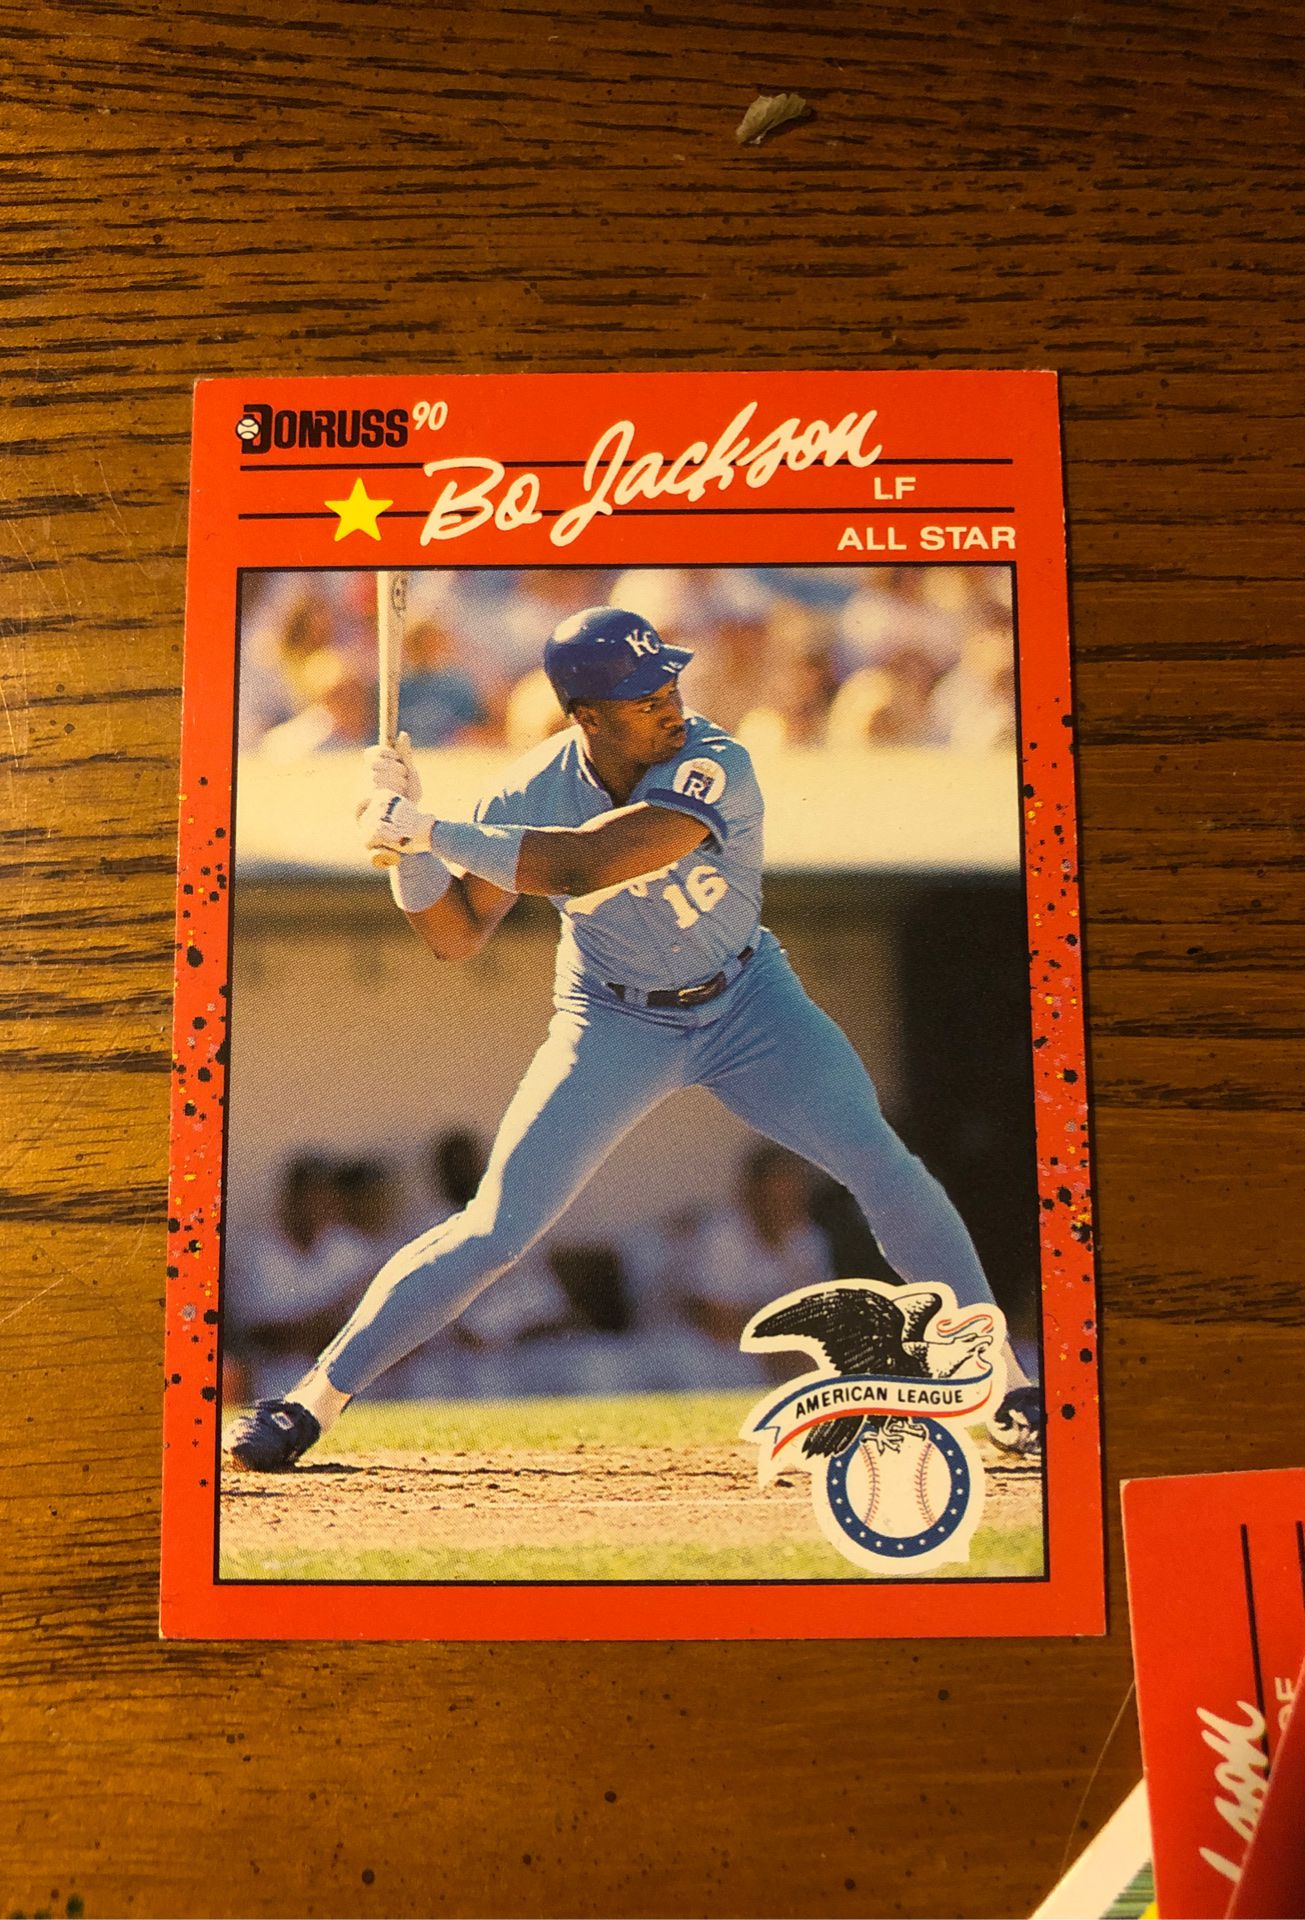 Donruss 1990 Bo Jackson #650 baseball card